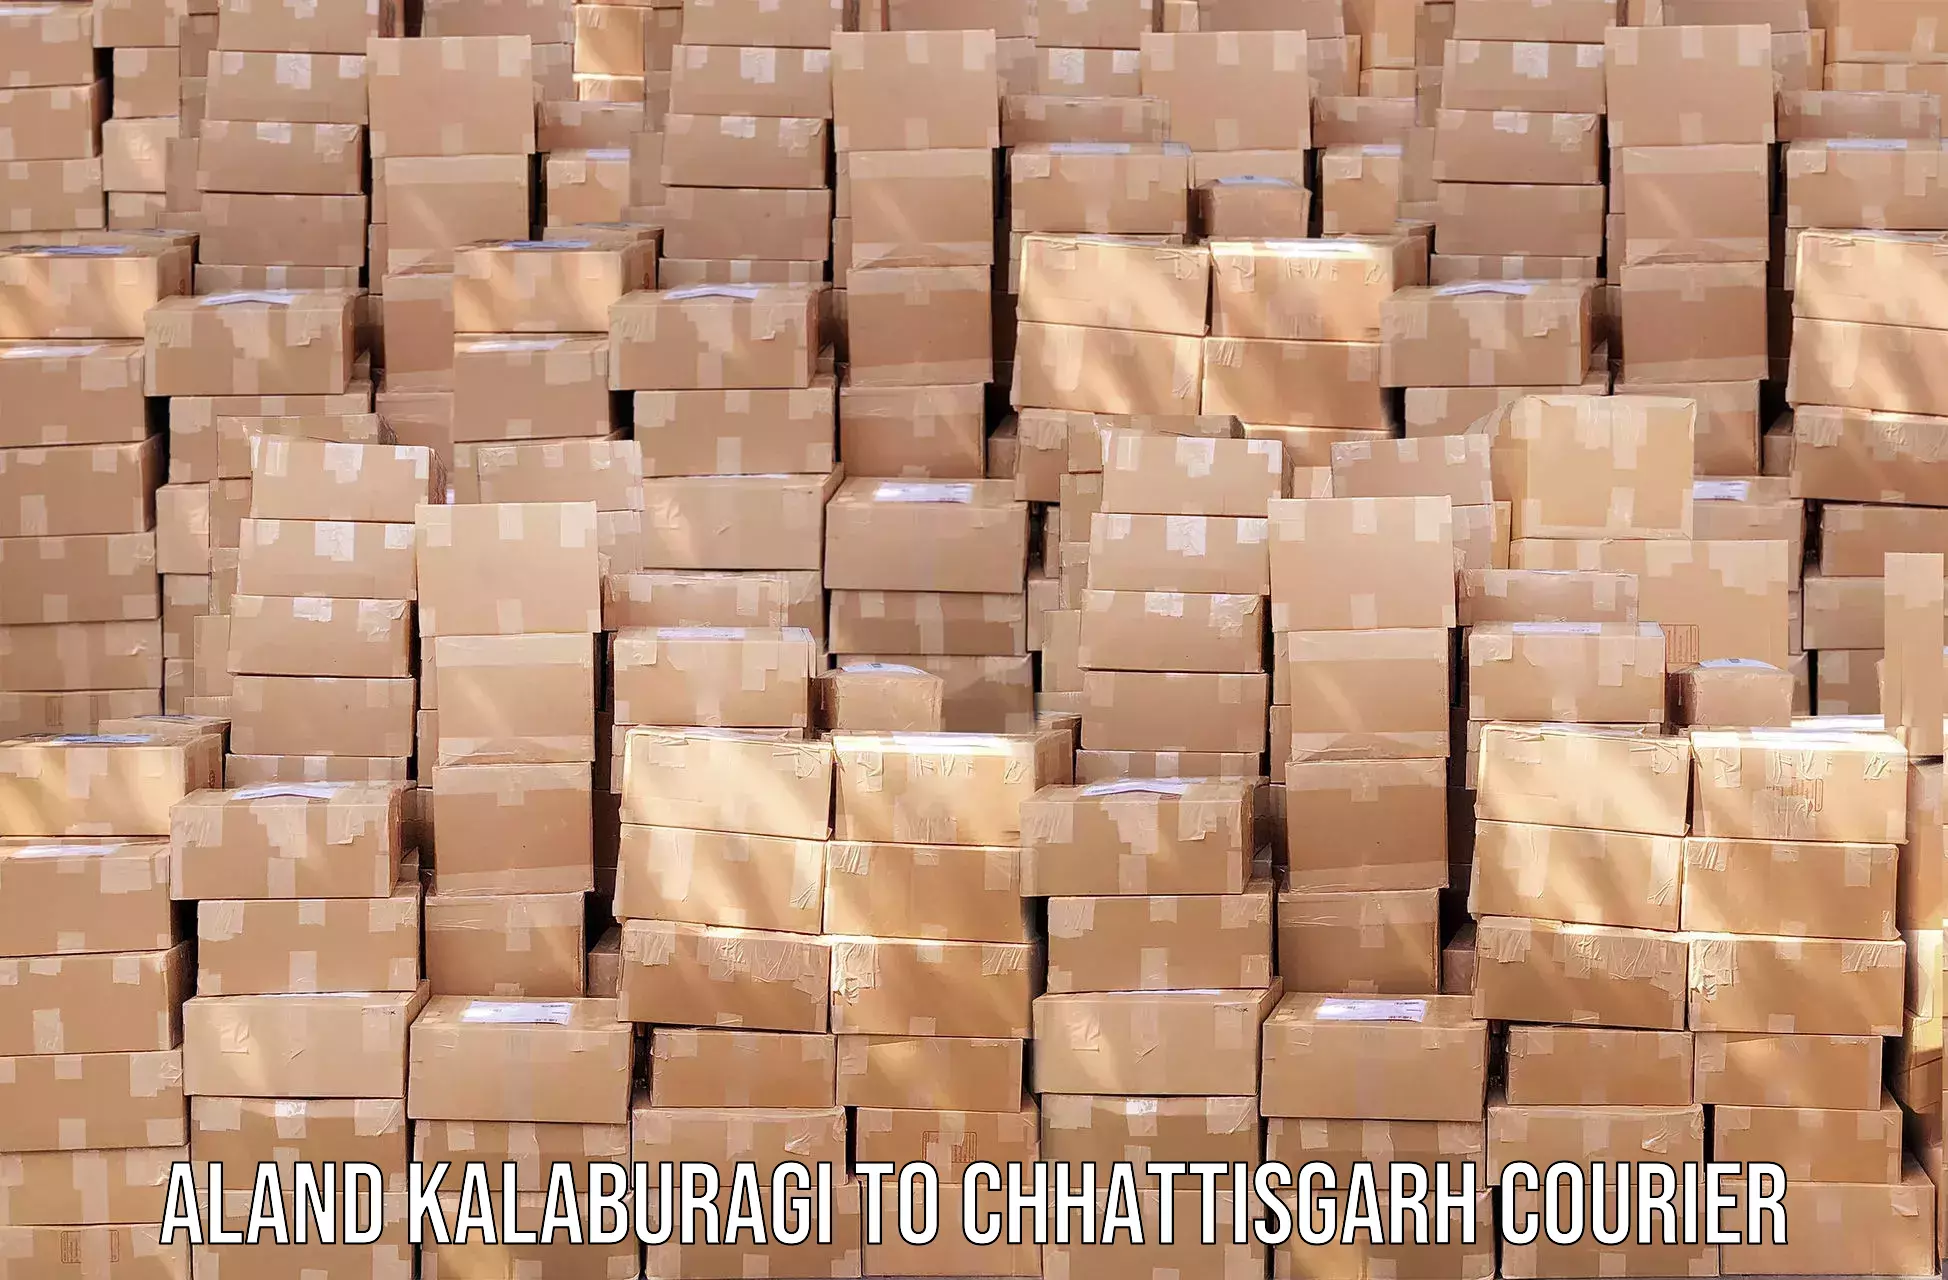 Courier service partnerships Aland Kalaburagi to Chhattisgarh